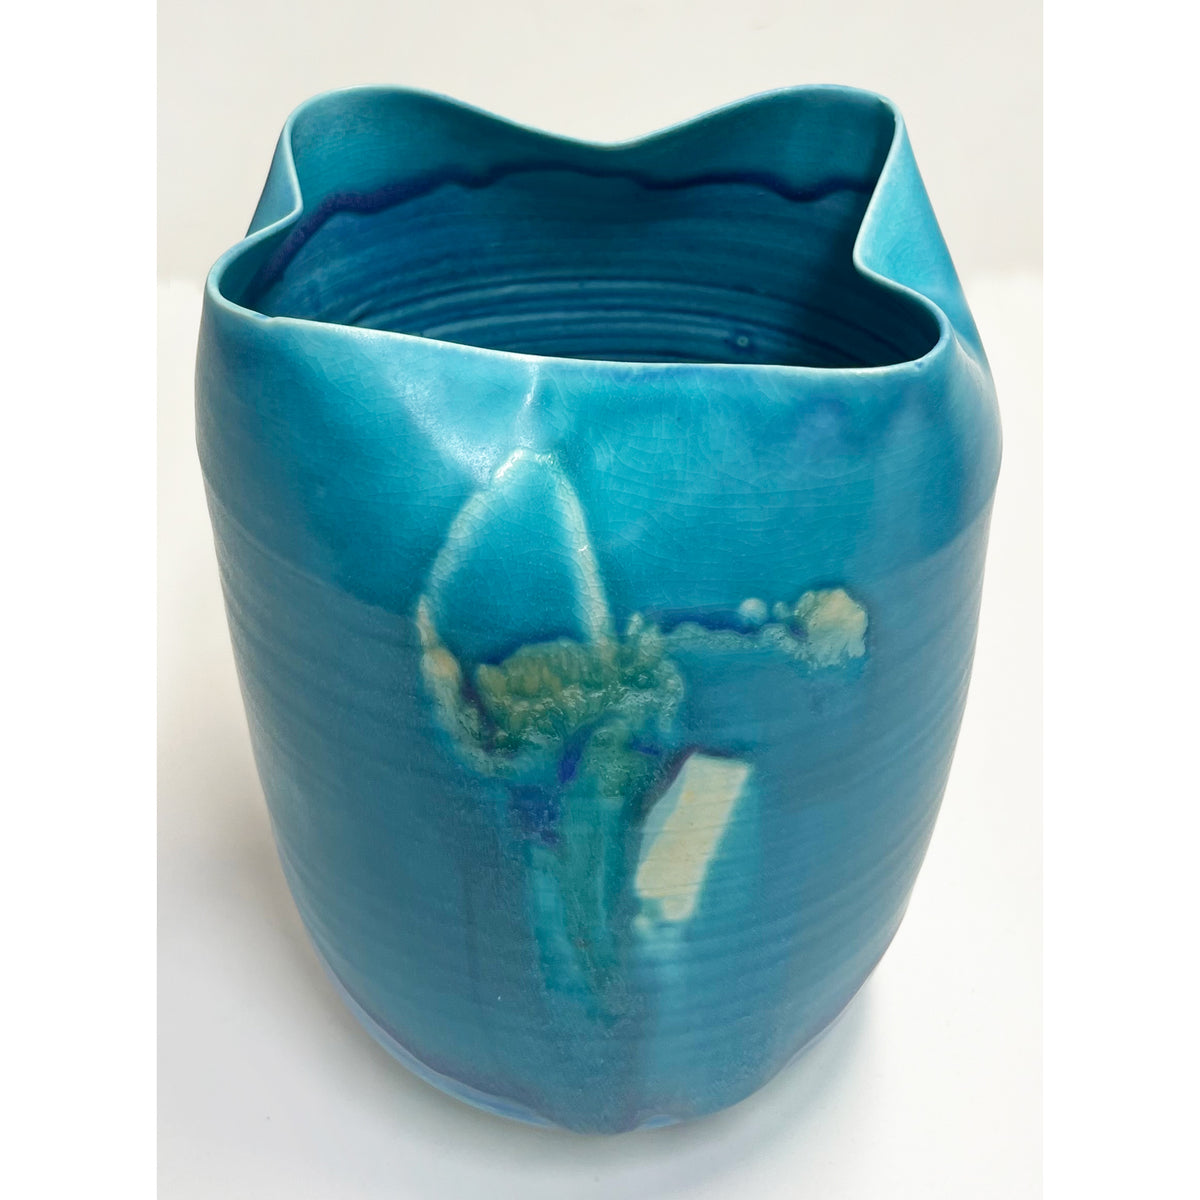 Kayo O'Young - Tall Turquoise Vase, 9" x 5.5" x 6"